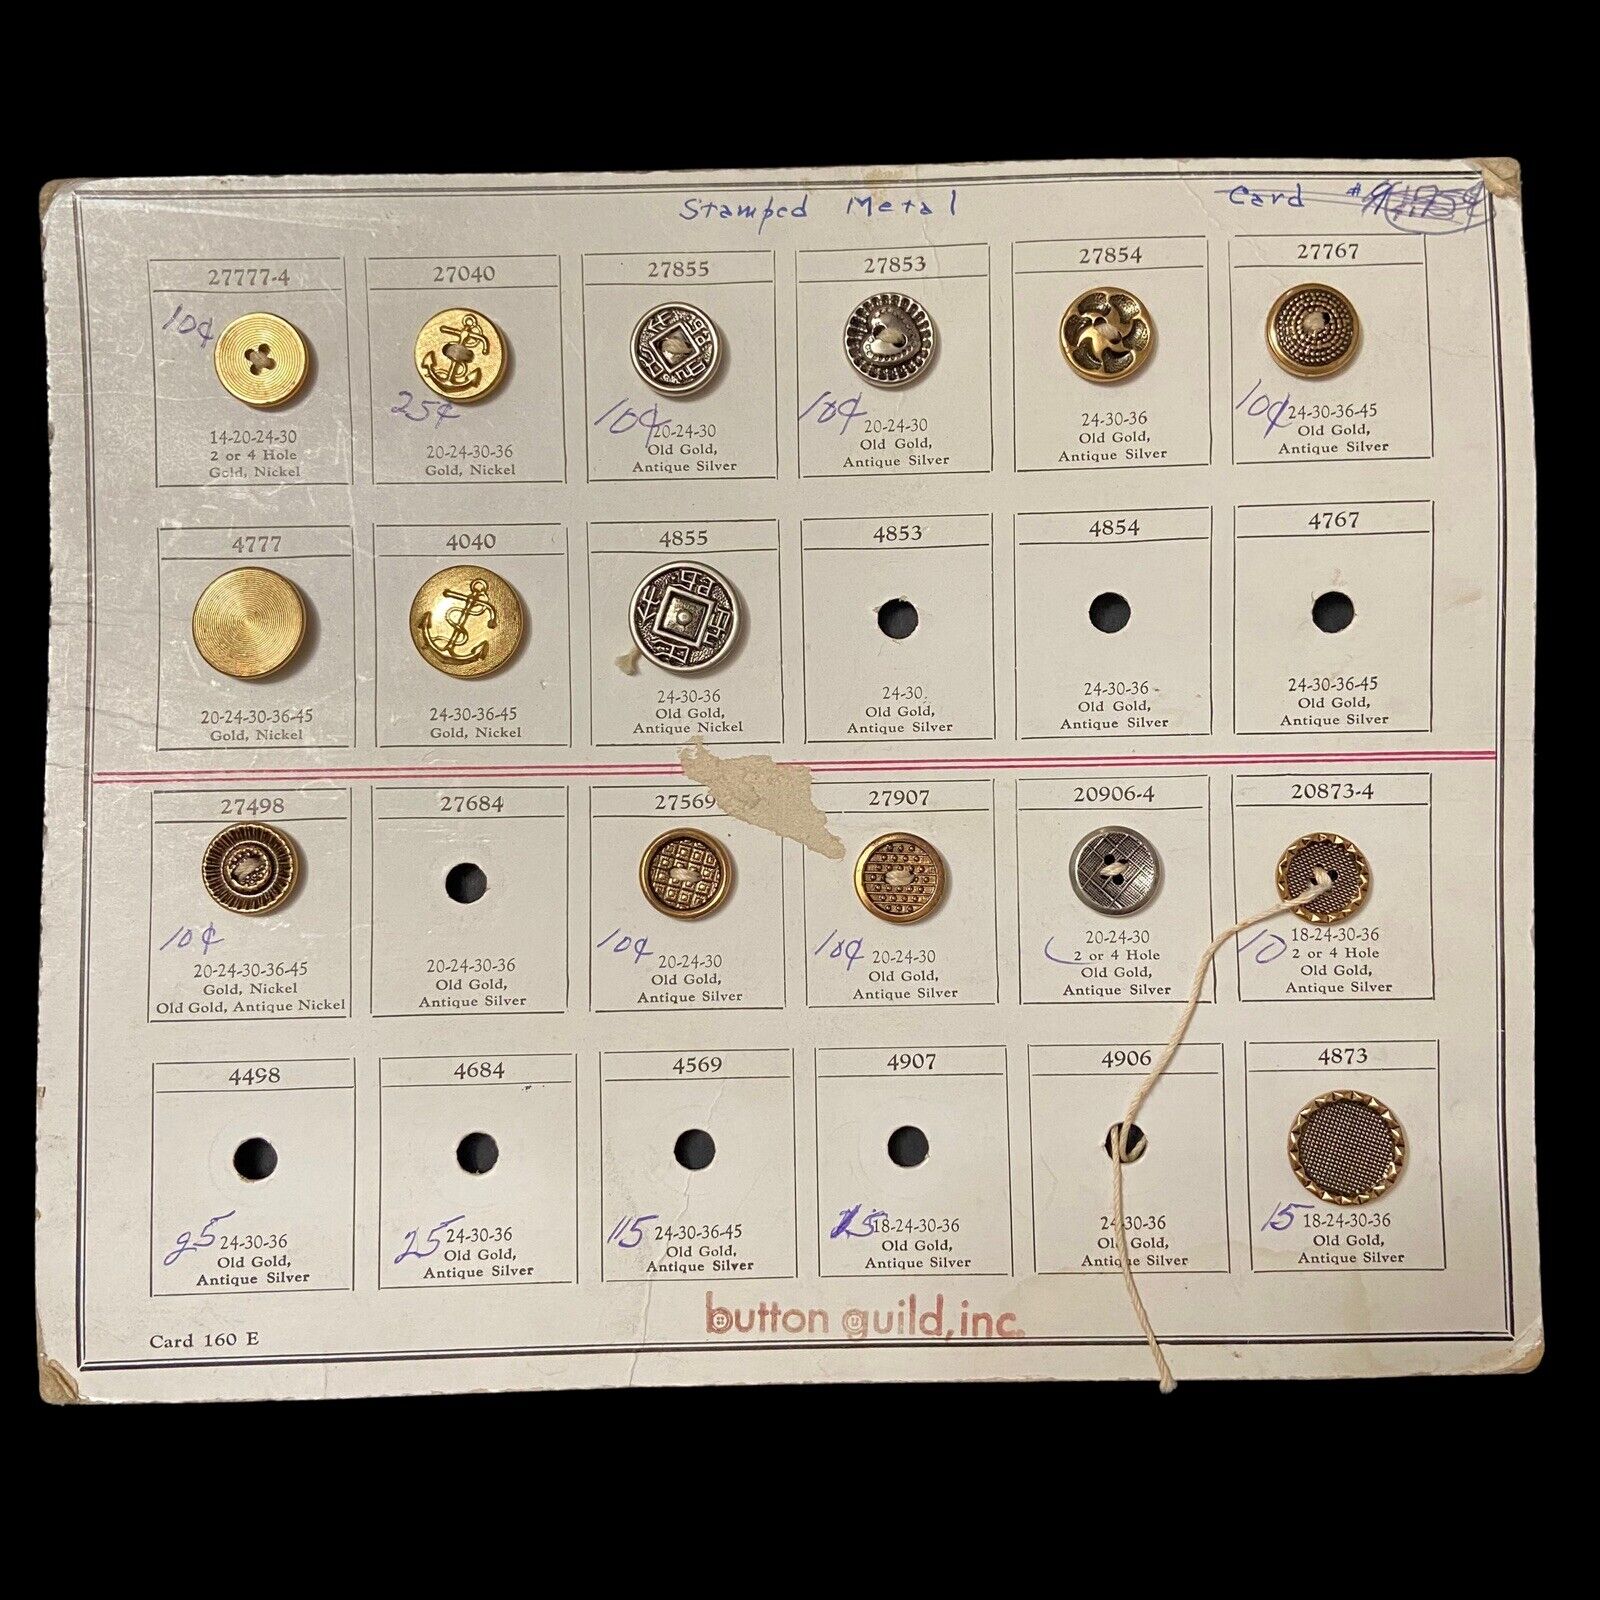 Vintage Metal Button Salesman Sample Display Card BUTTON GUILD, INC. Card 160 E